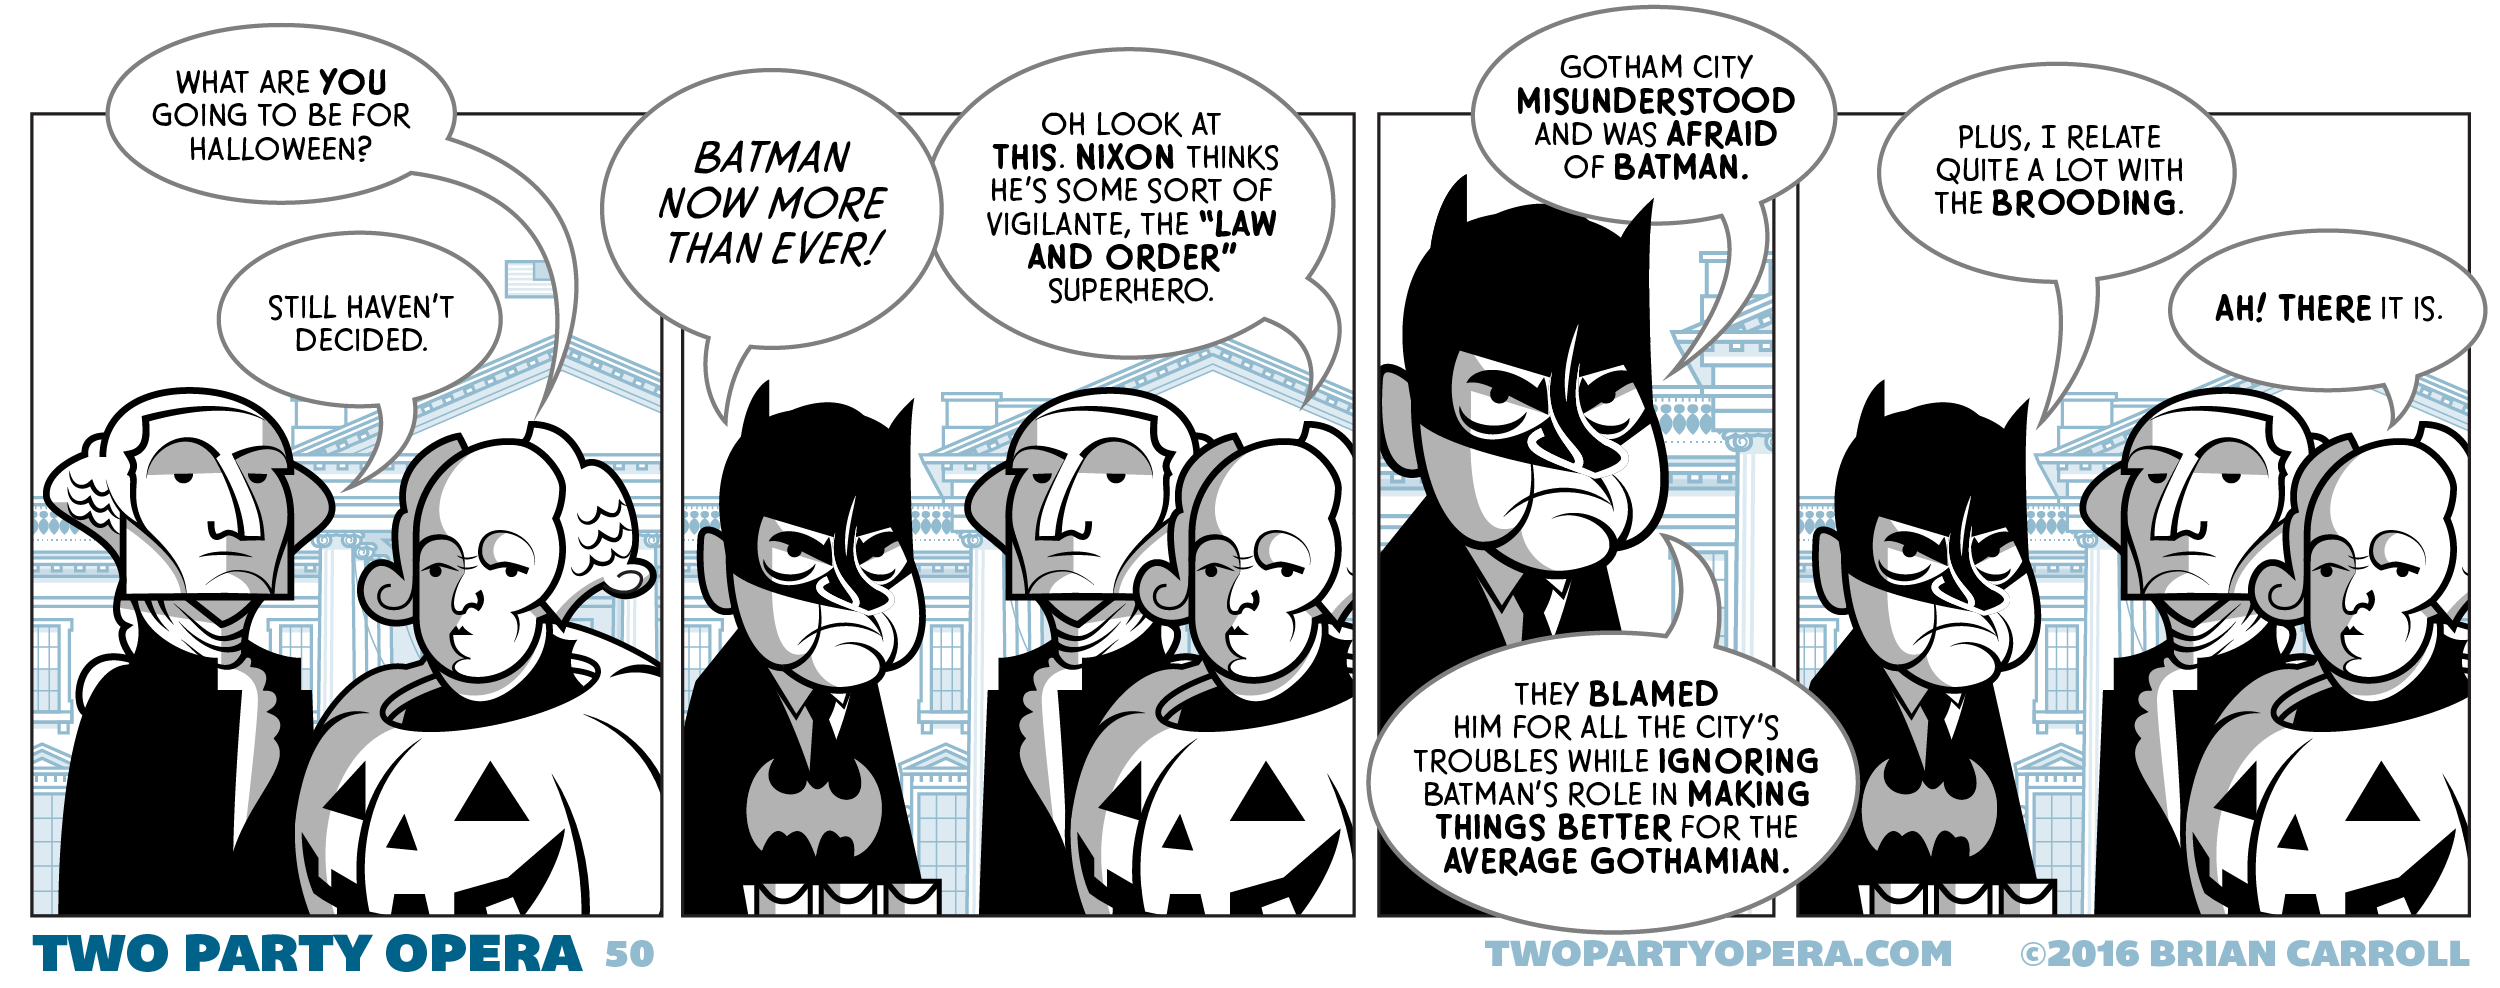 Batman Now More Than Ever